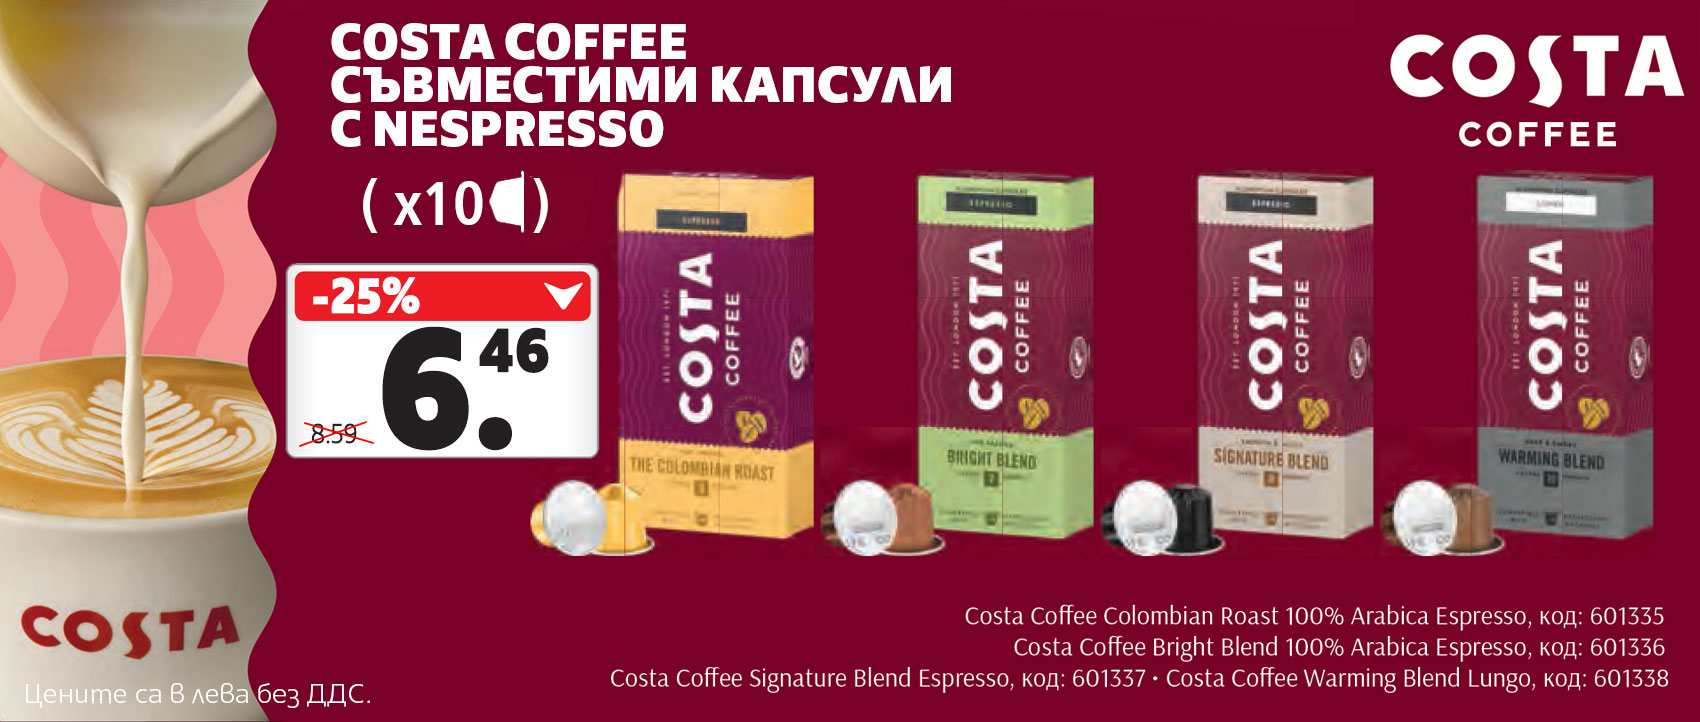 Costa café съвместими капсули nespresso